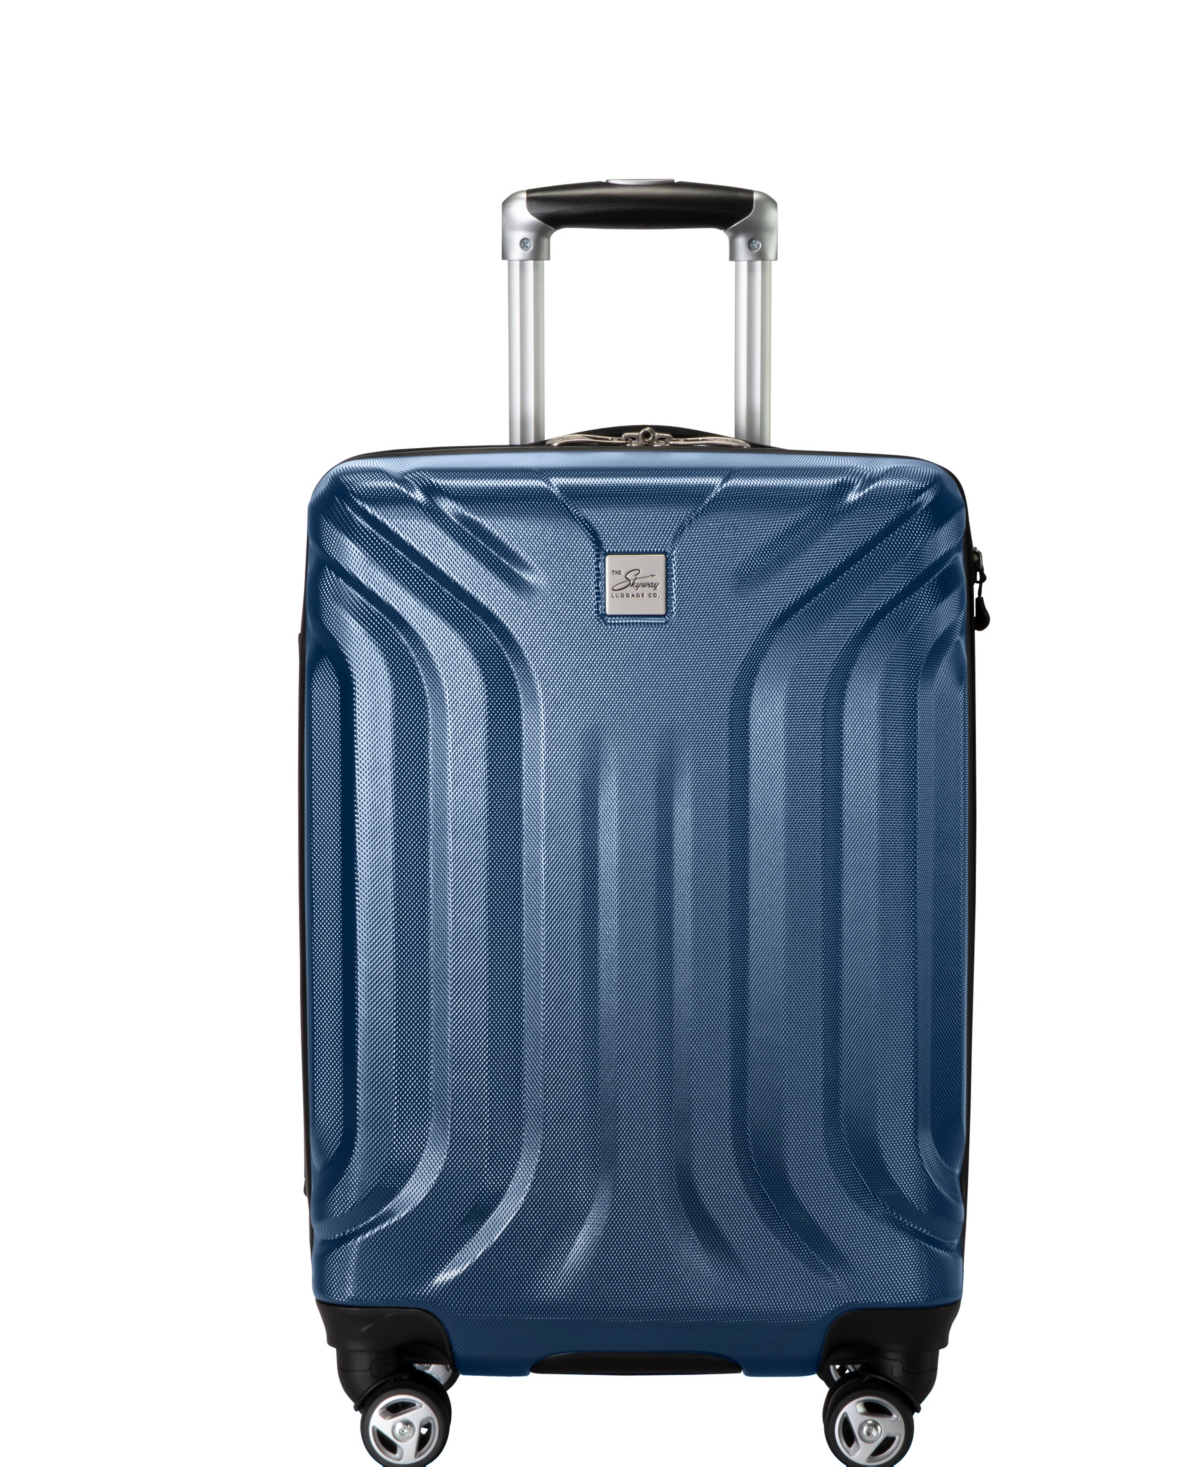 Skyway Nimbus 4.0 20" Hardside Carry-on Suitcase In Maritime Blue